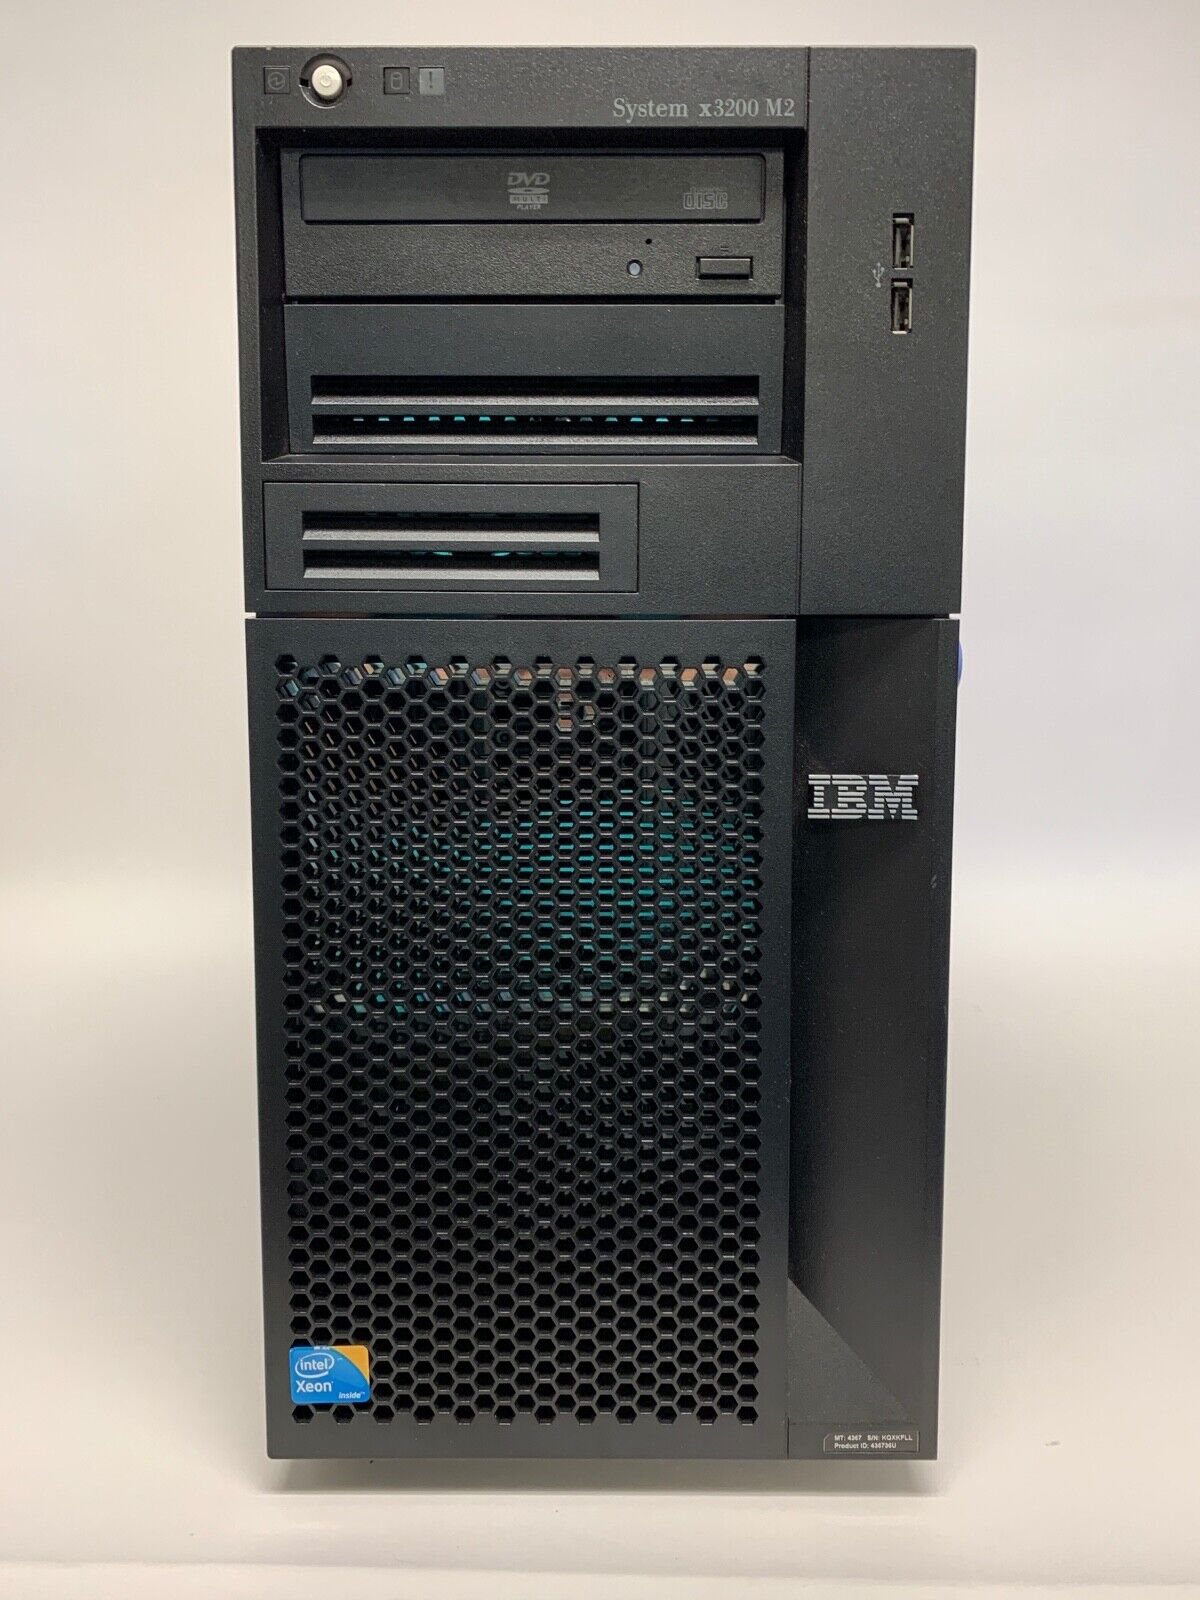 IBM SYSTEM x3200 M2 Server - HDD wiped, No OS